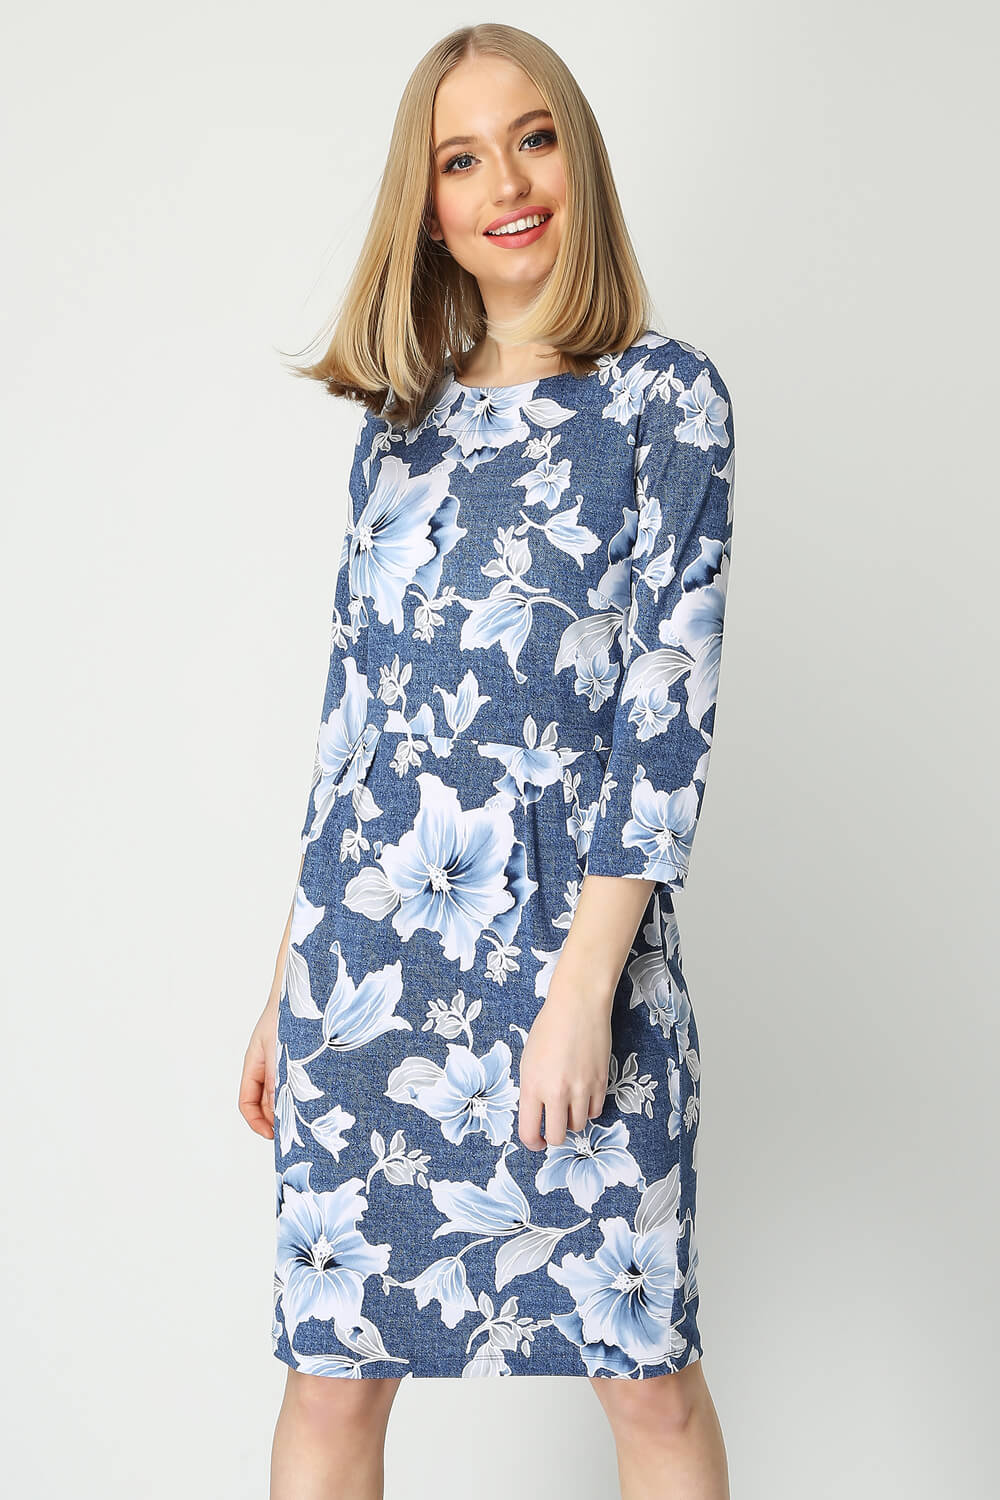 Floral Print Pocket Dress in Blue - Roman Originals UK